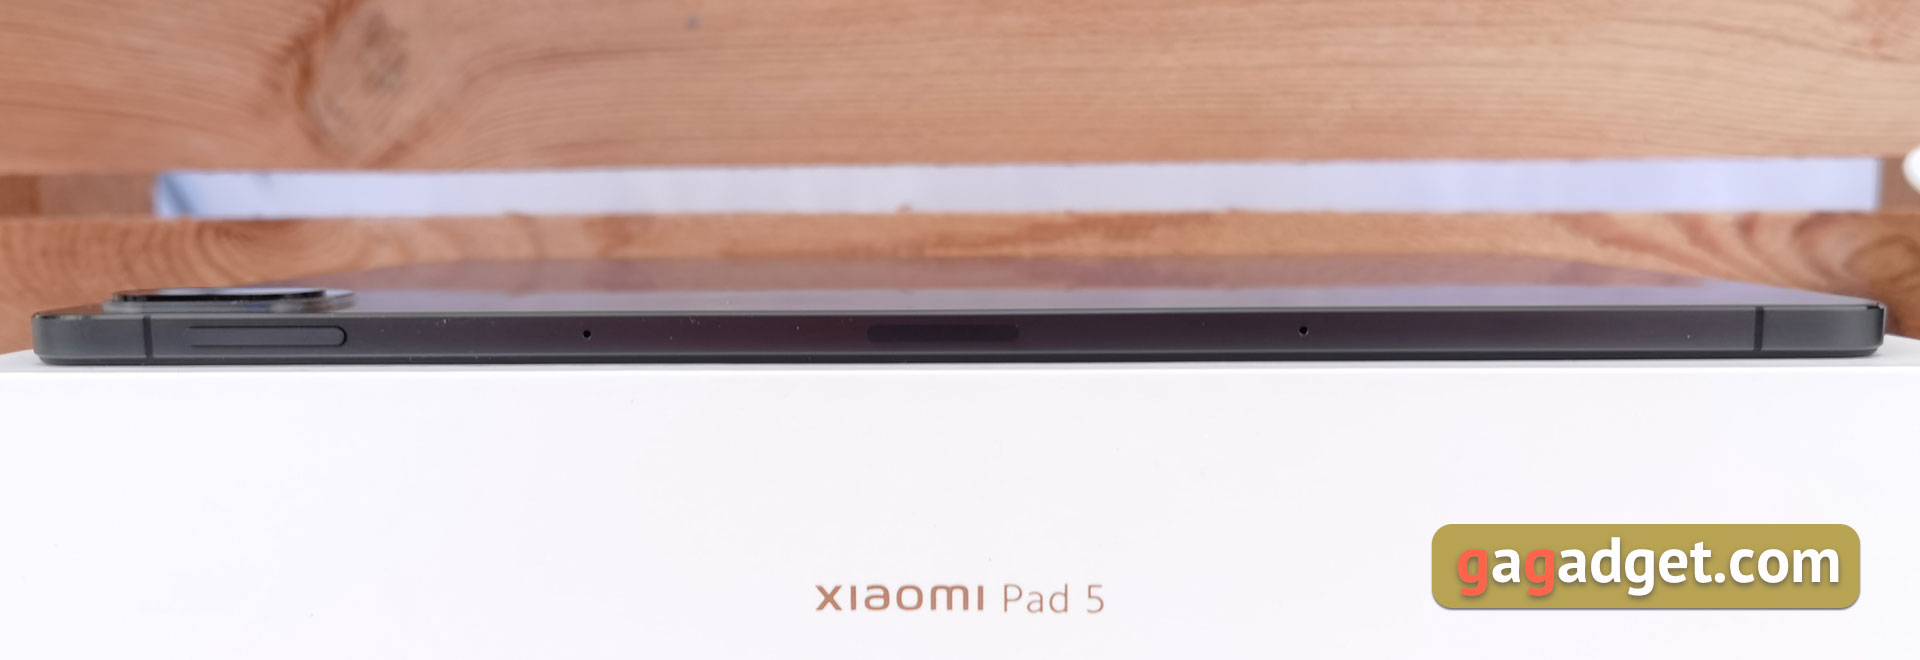 Xiaomi Pad 5 Review-12